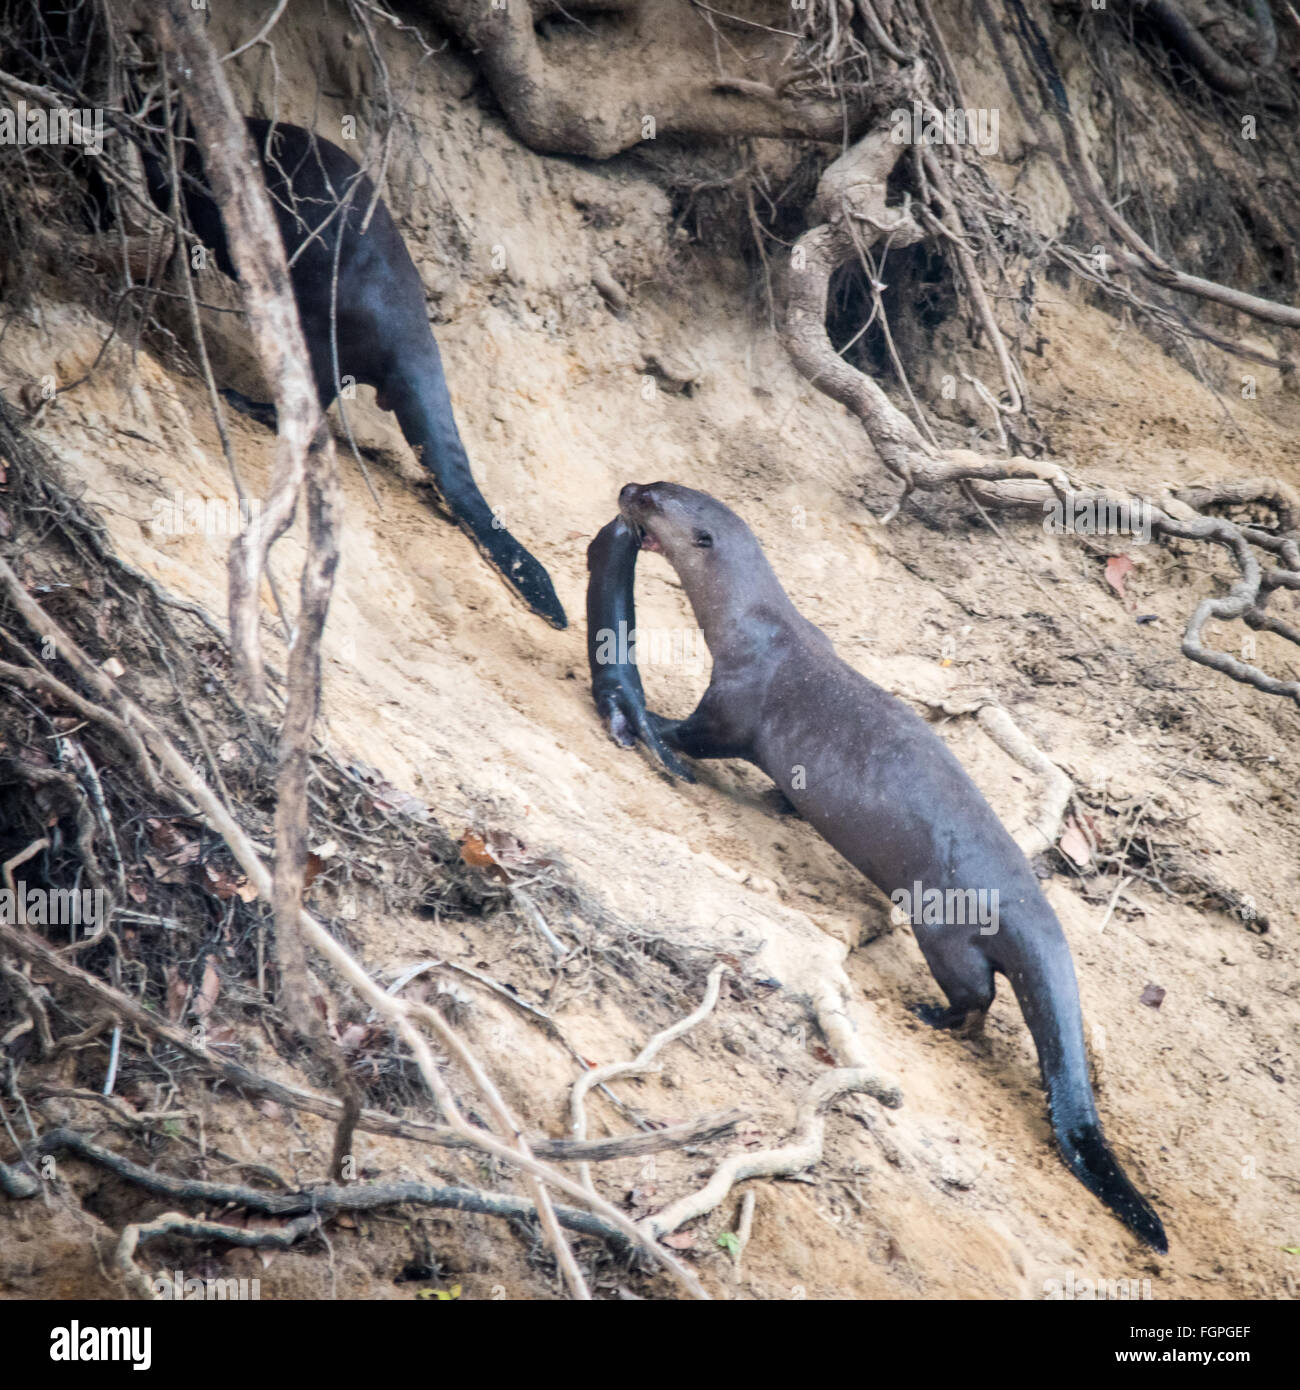 Giant-river otter (Pteronura brasiliensis), Guyana, South America Stock Photo